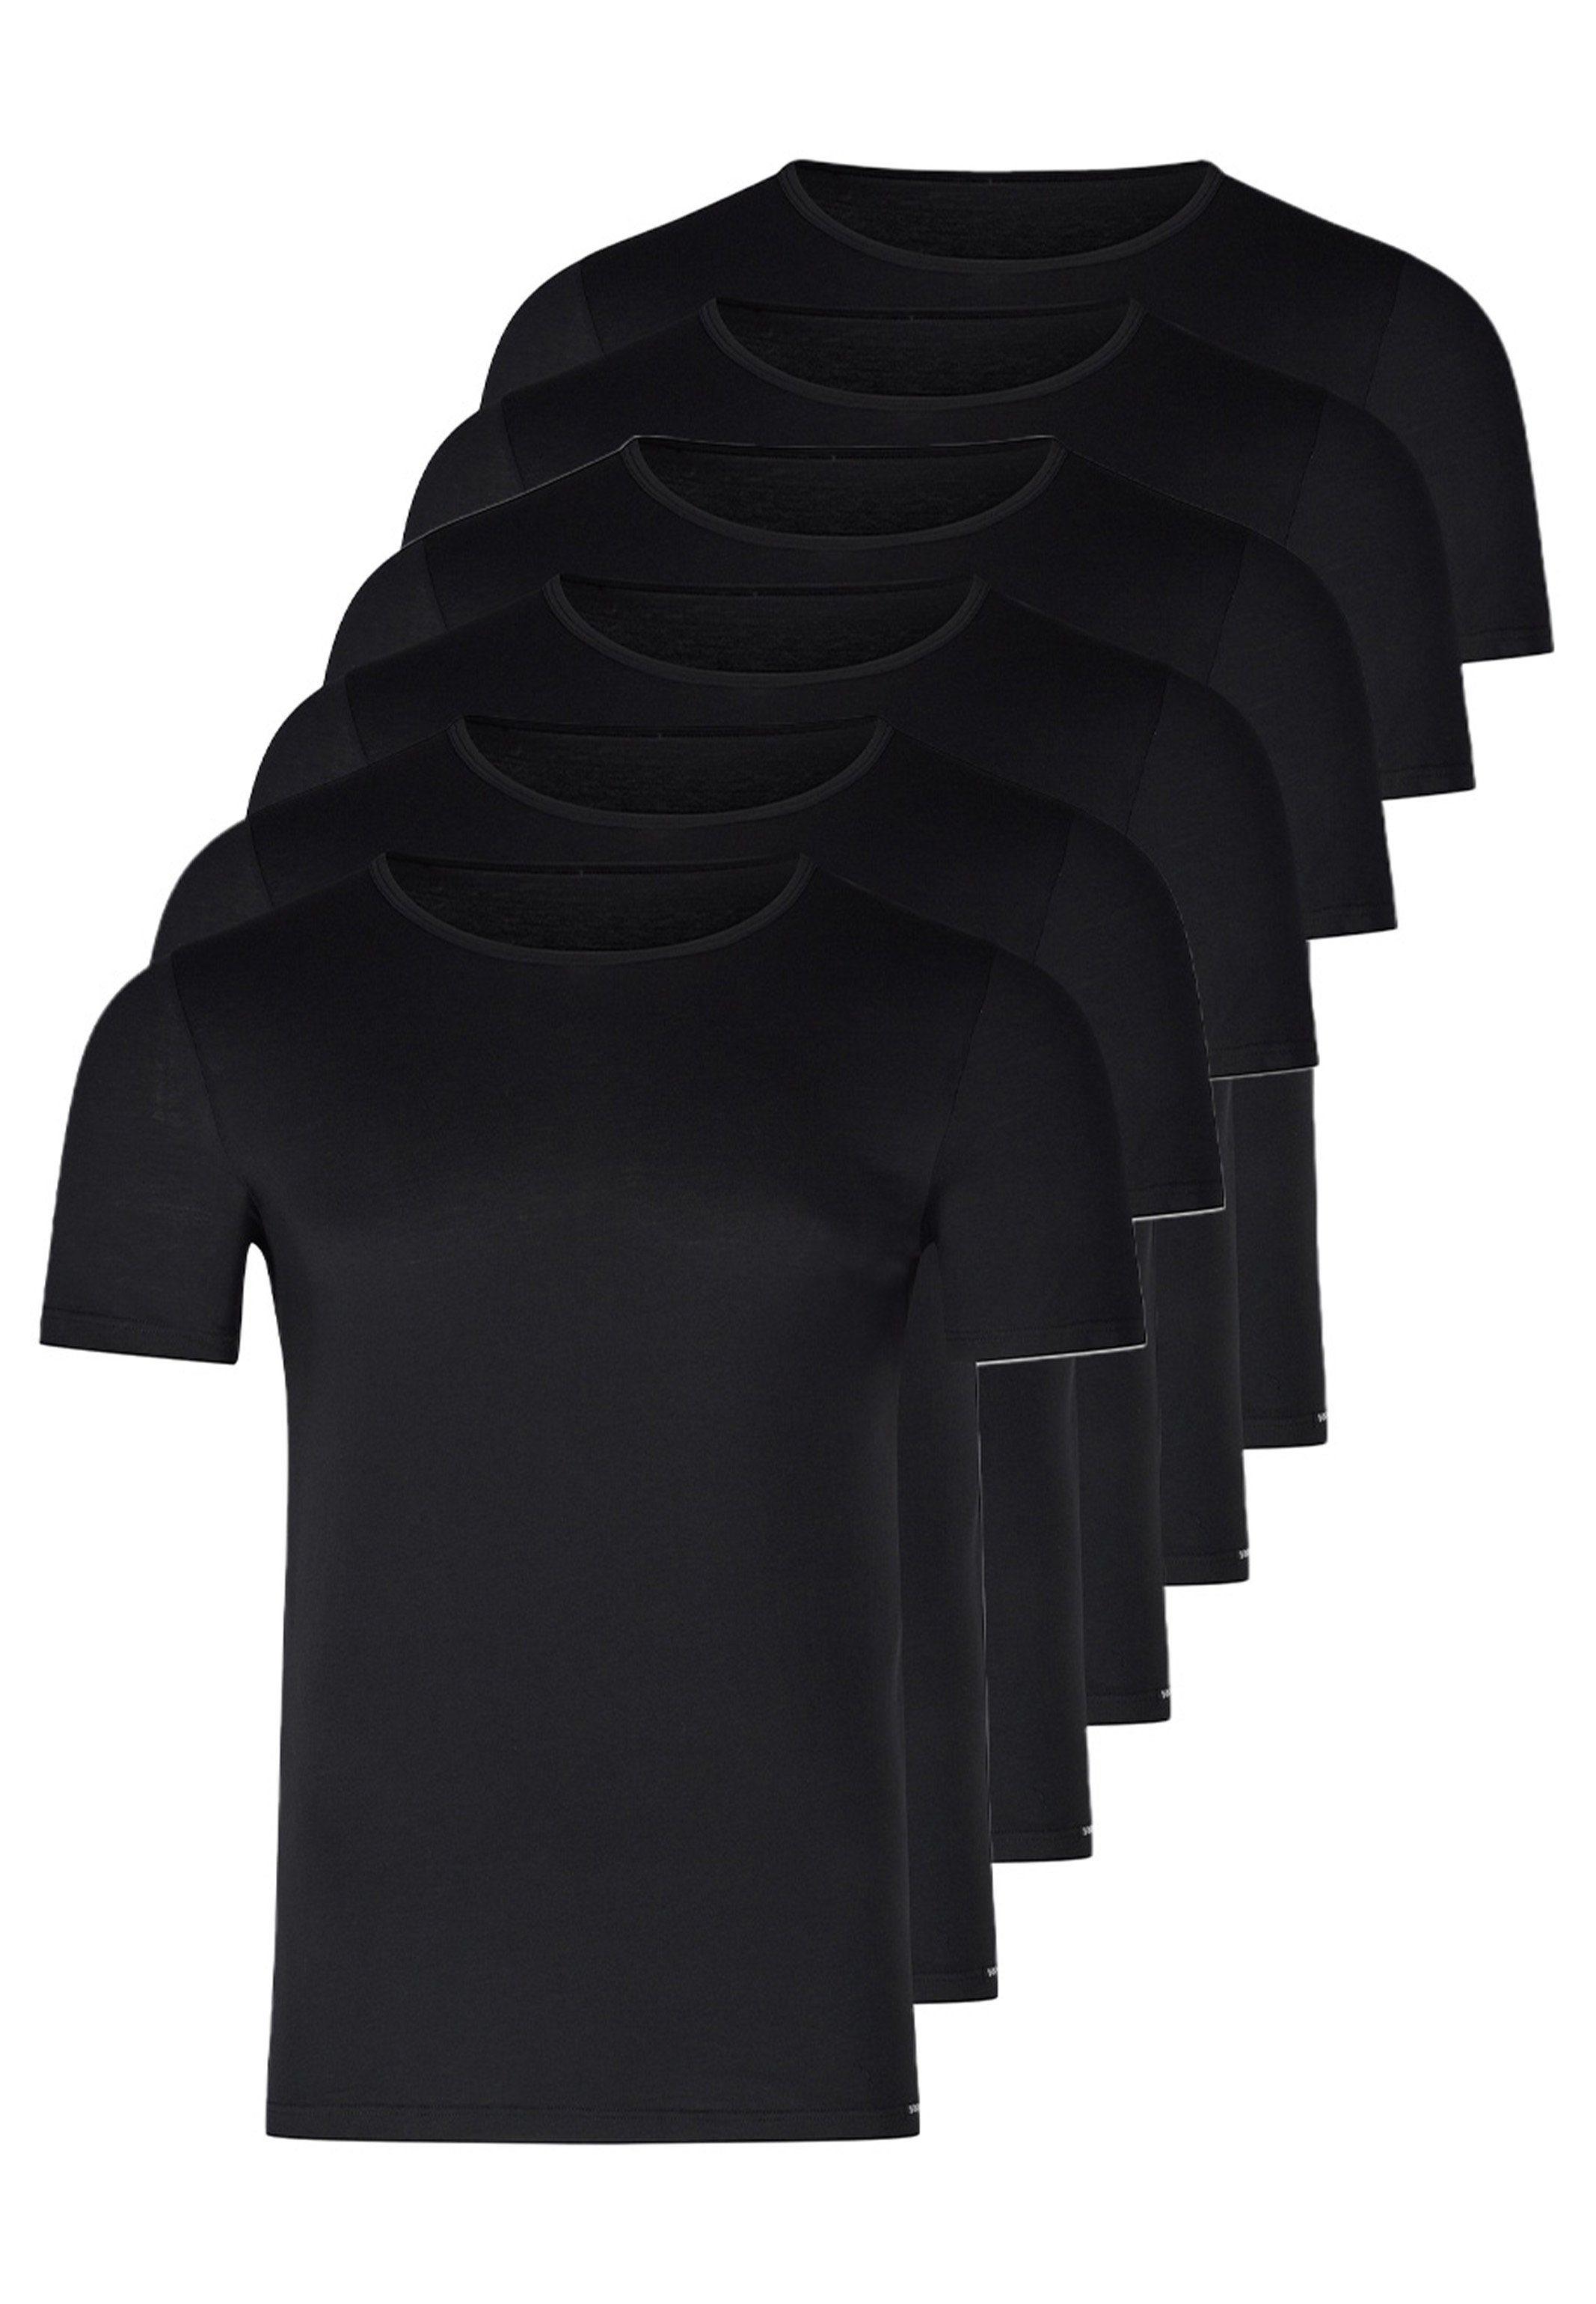 - Baumwolle Unterhemd Schwarz T-Shirt Shirt Pack Rundhalsausschnitt (Spar-Set, / Unterhemd / 6er Kurzarm 6-St) Skiny - Unterhemd Kurzarm Shirt mit